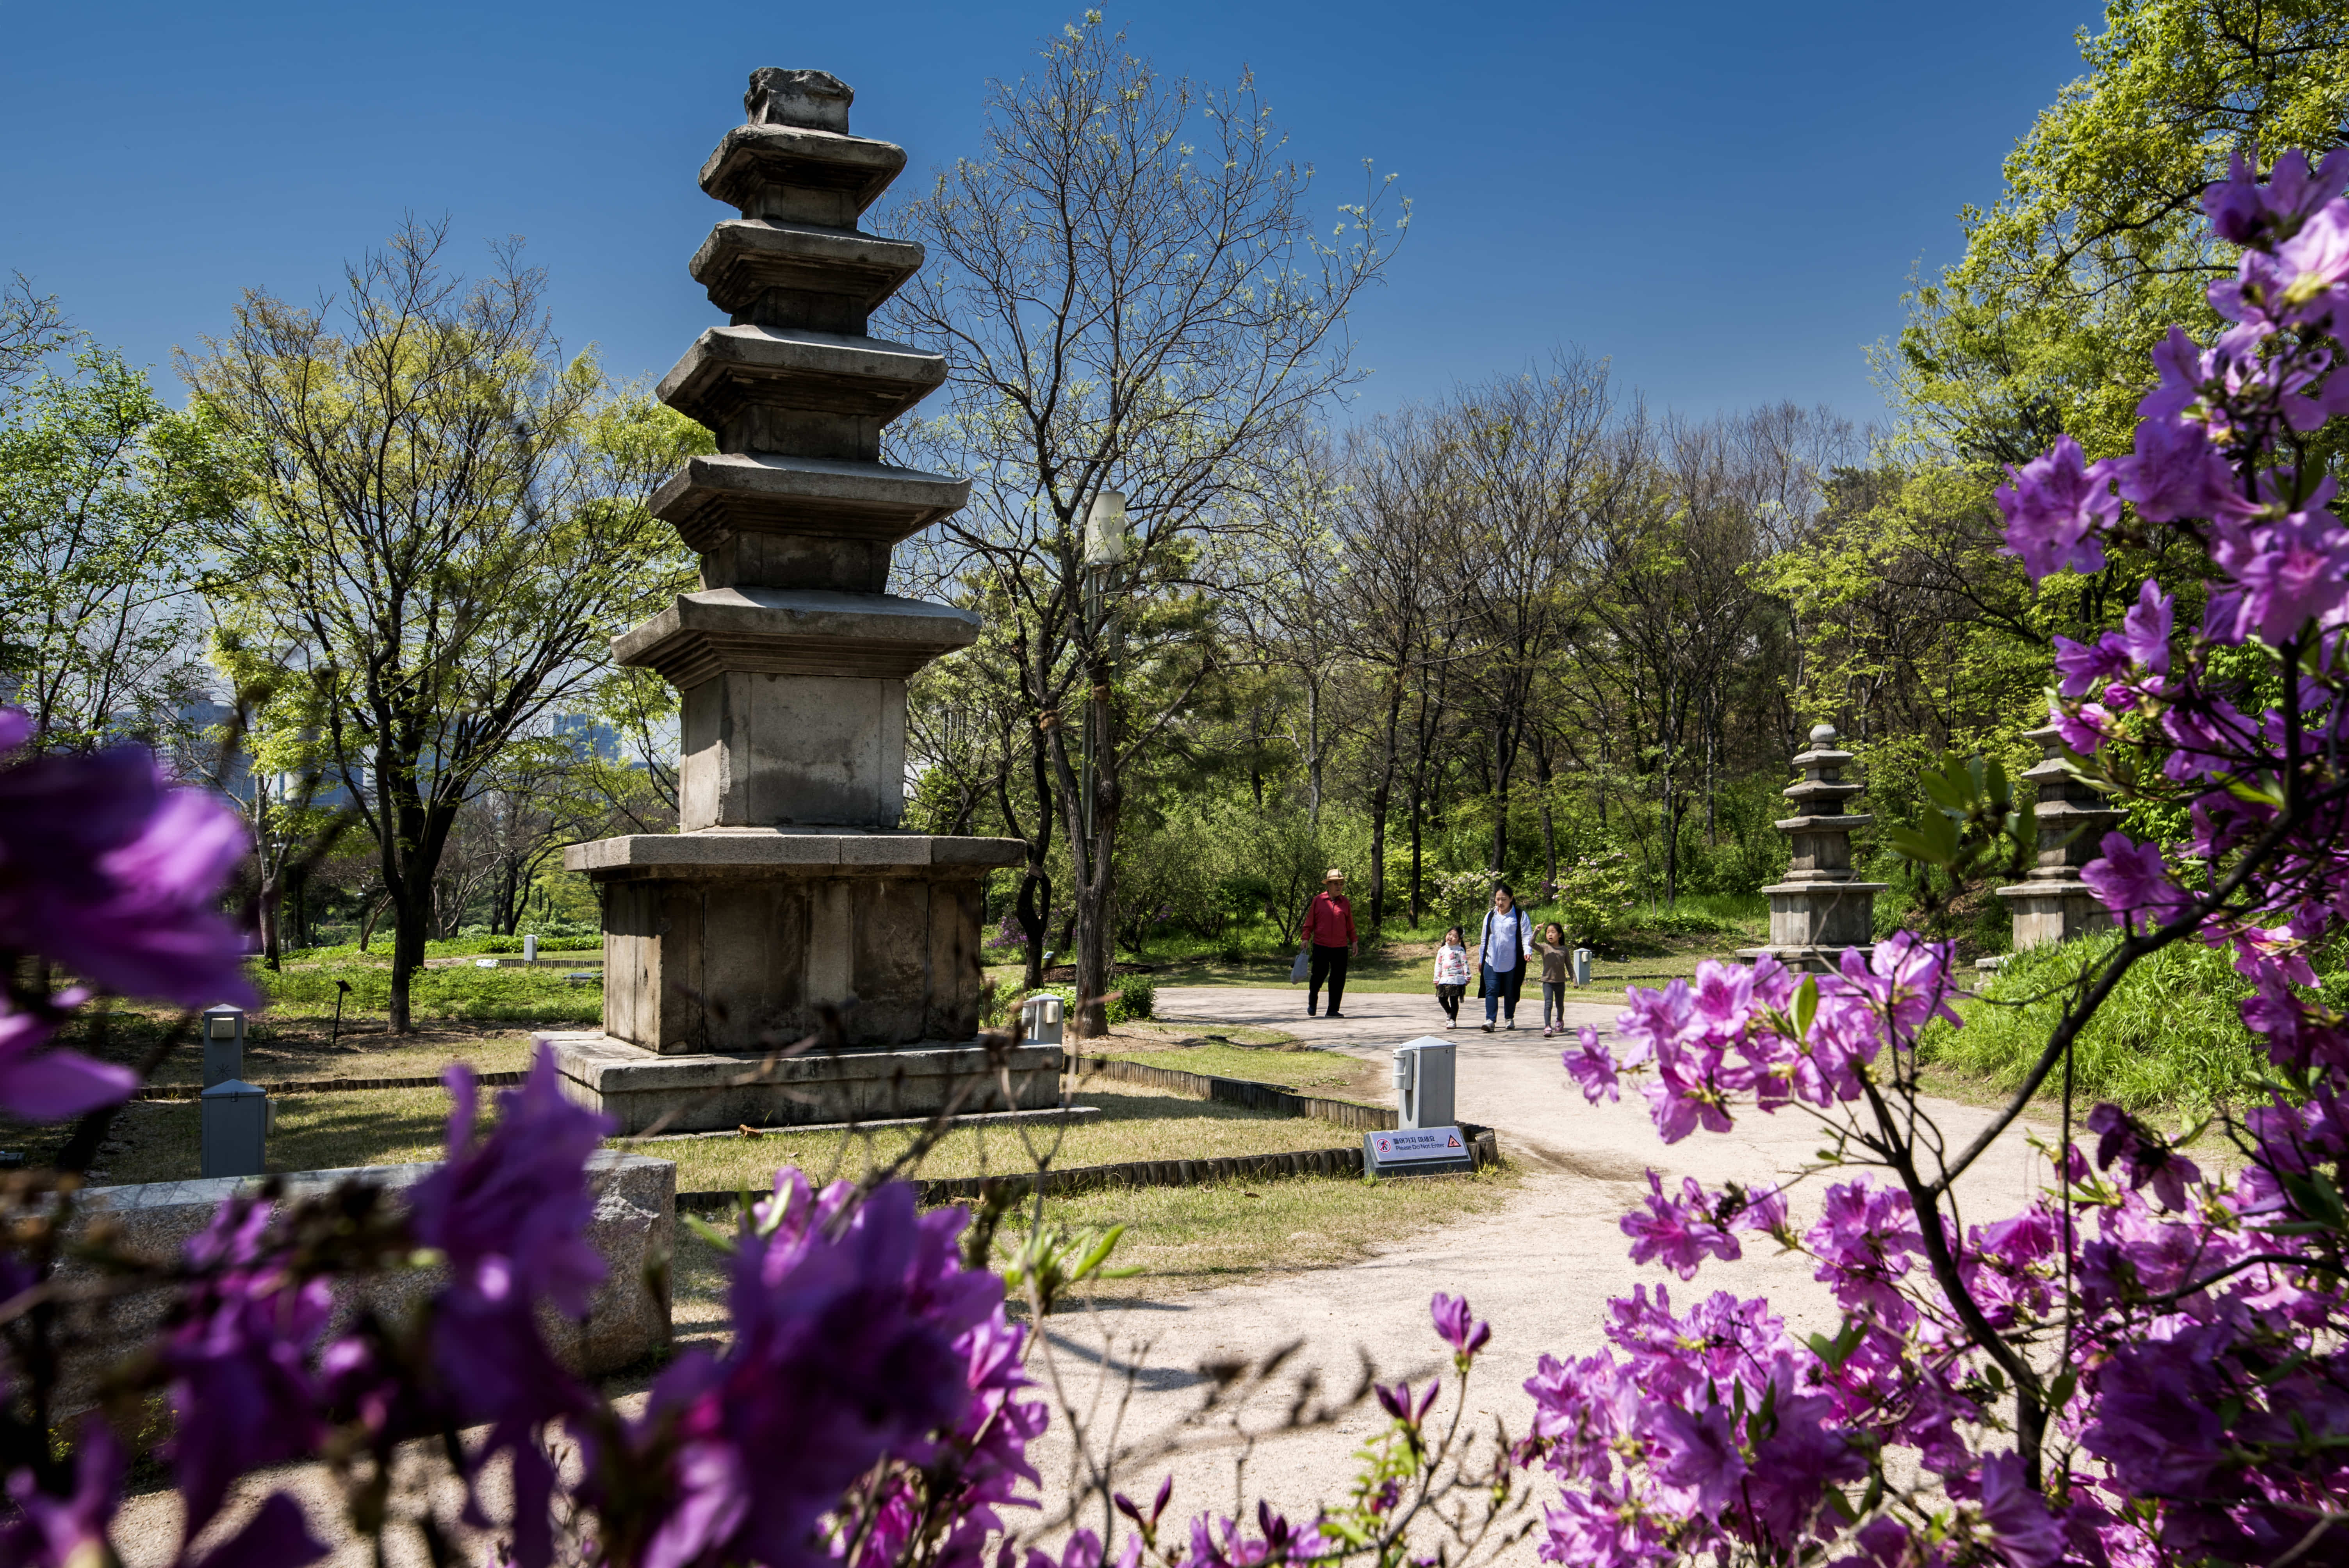 National Museum of Korea4 : Pagoda garden in the National Museum of Korea 
